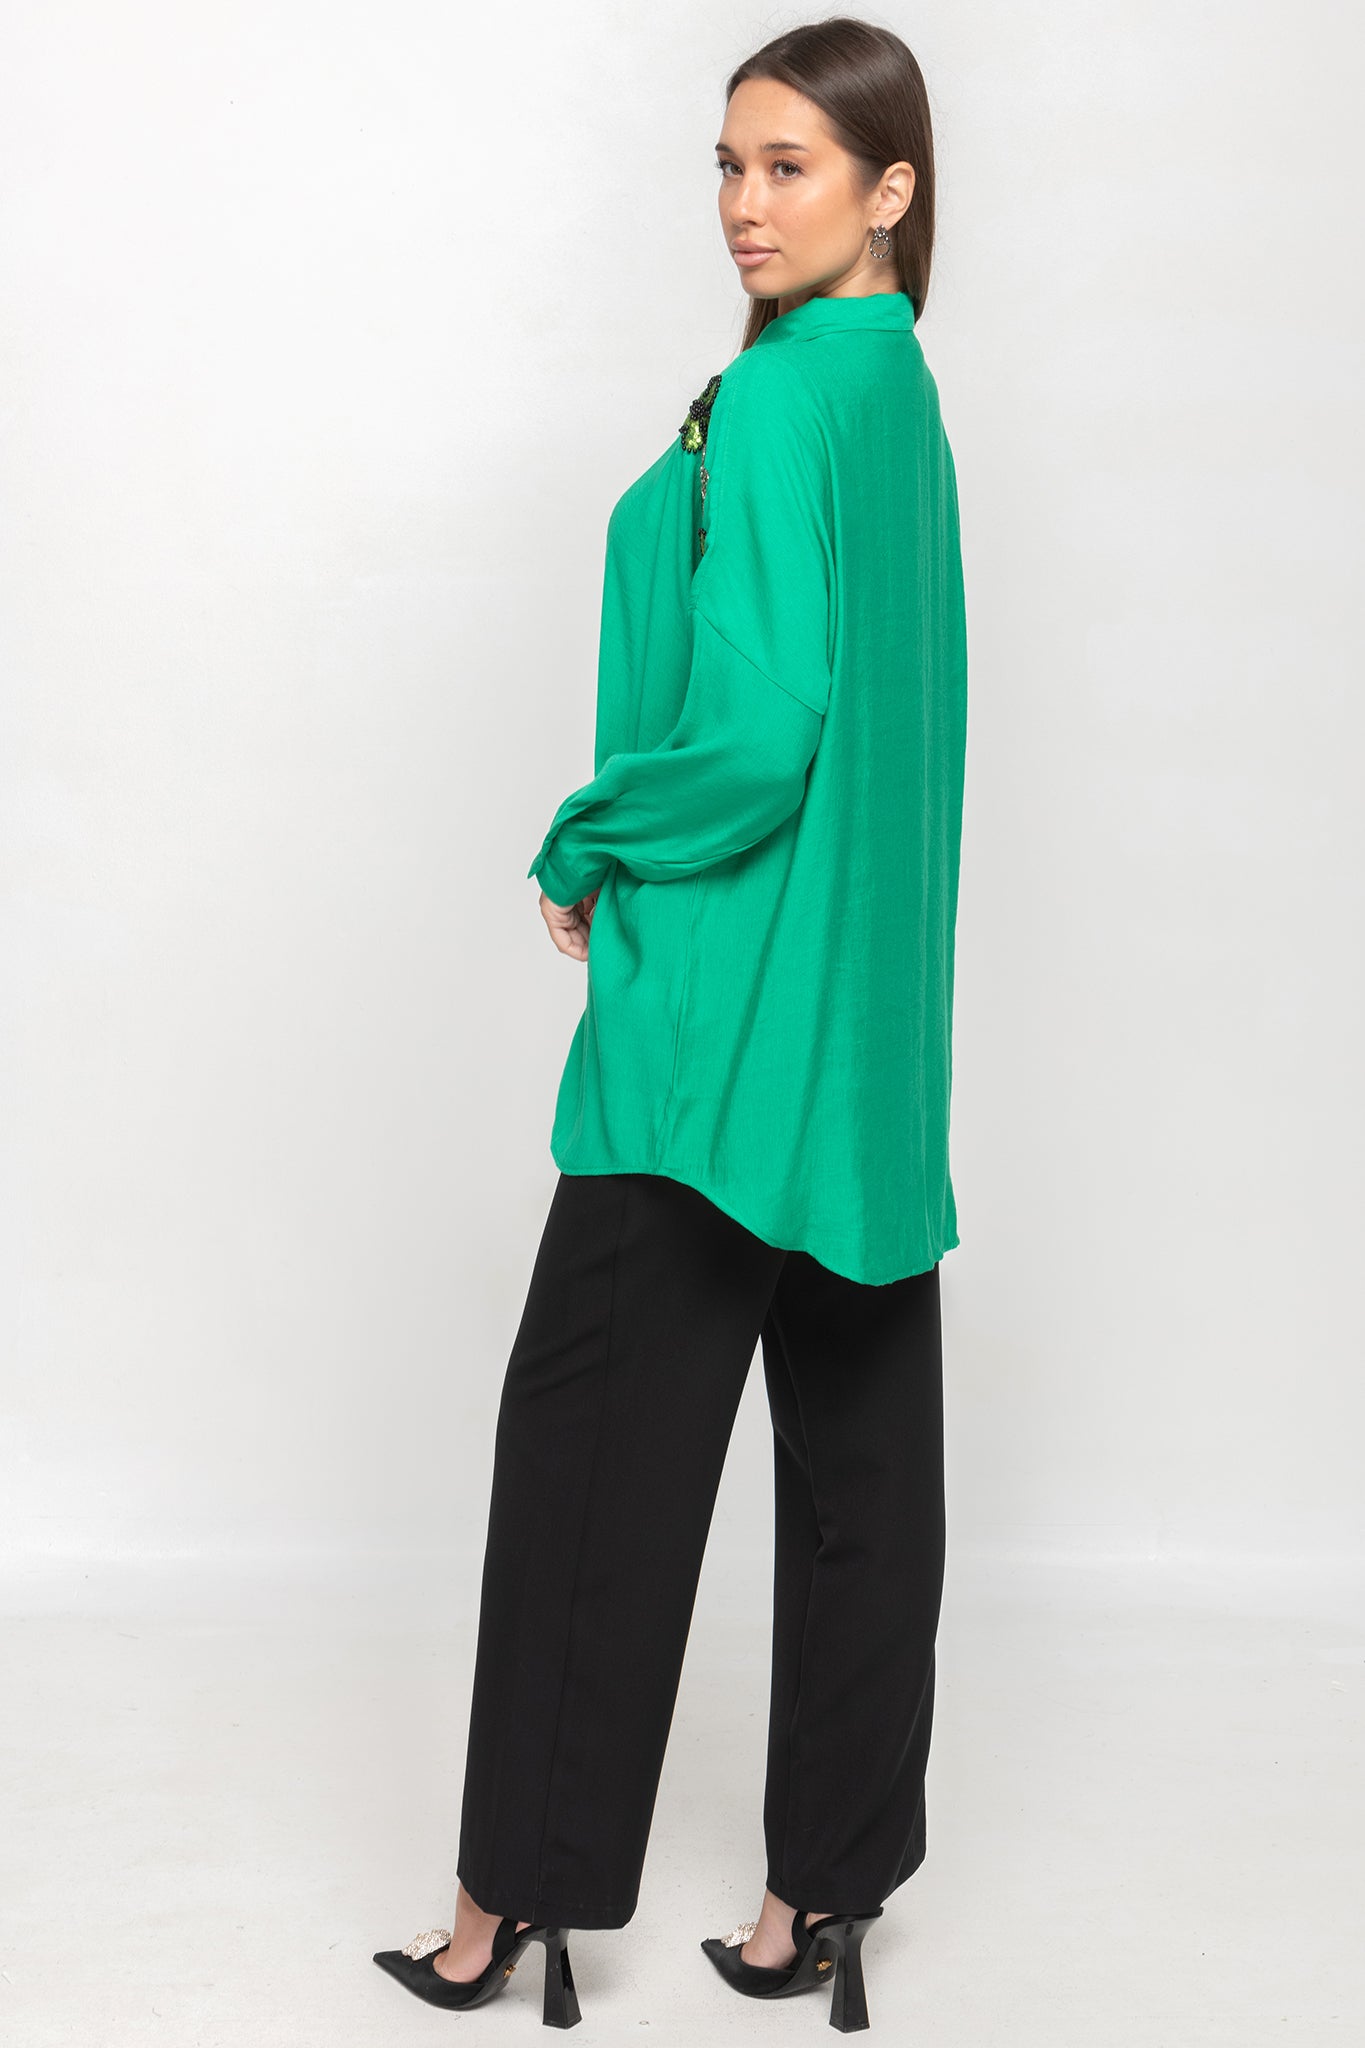 Flora Embroidered shirt- Green